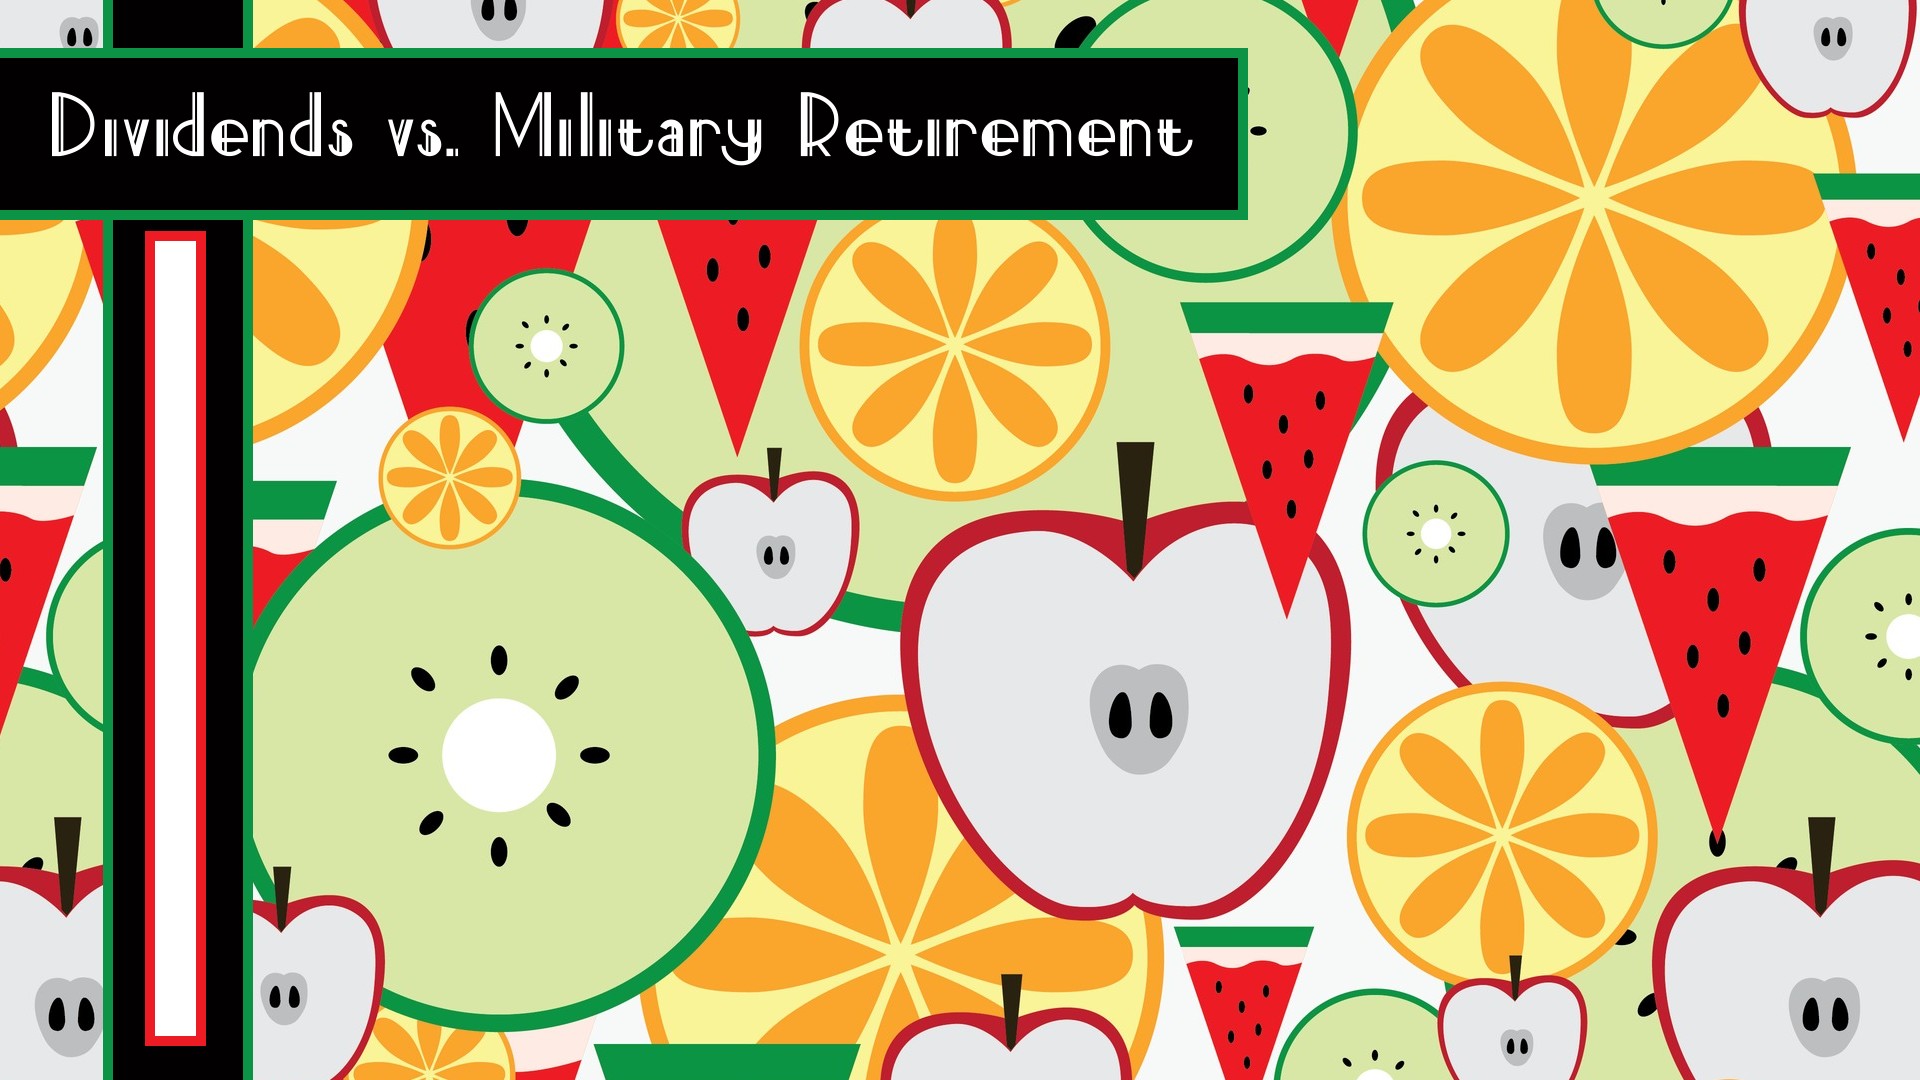 Dividends vs. Military Retirement